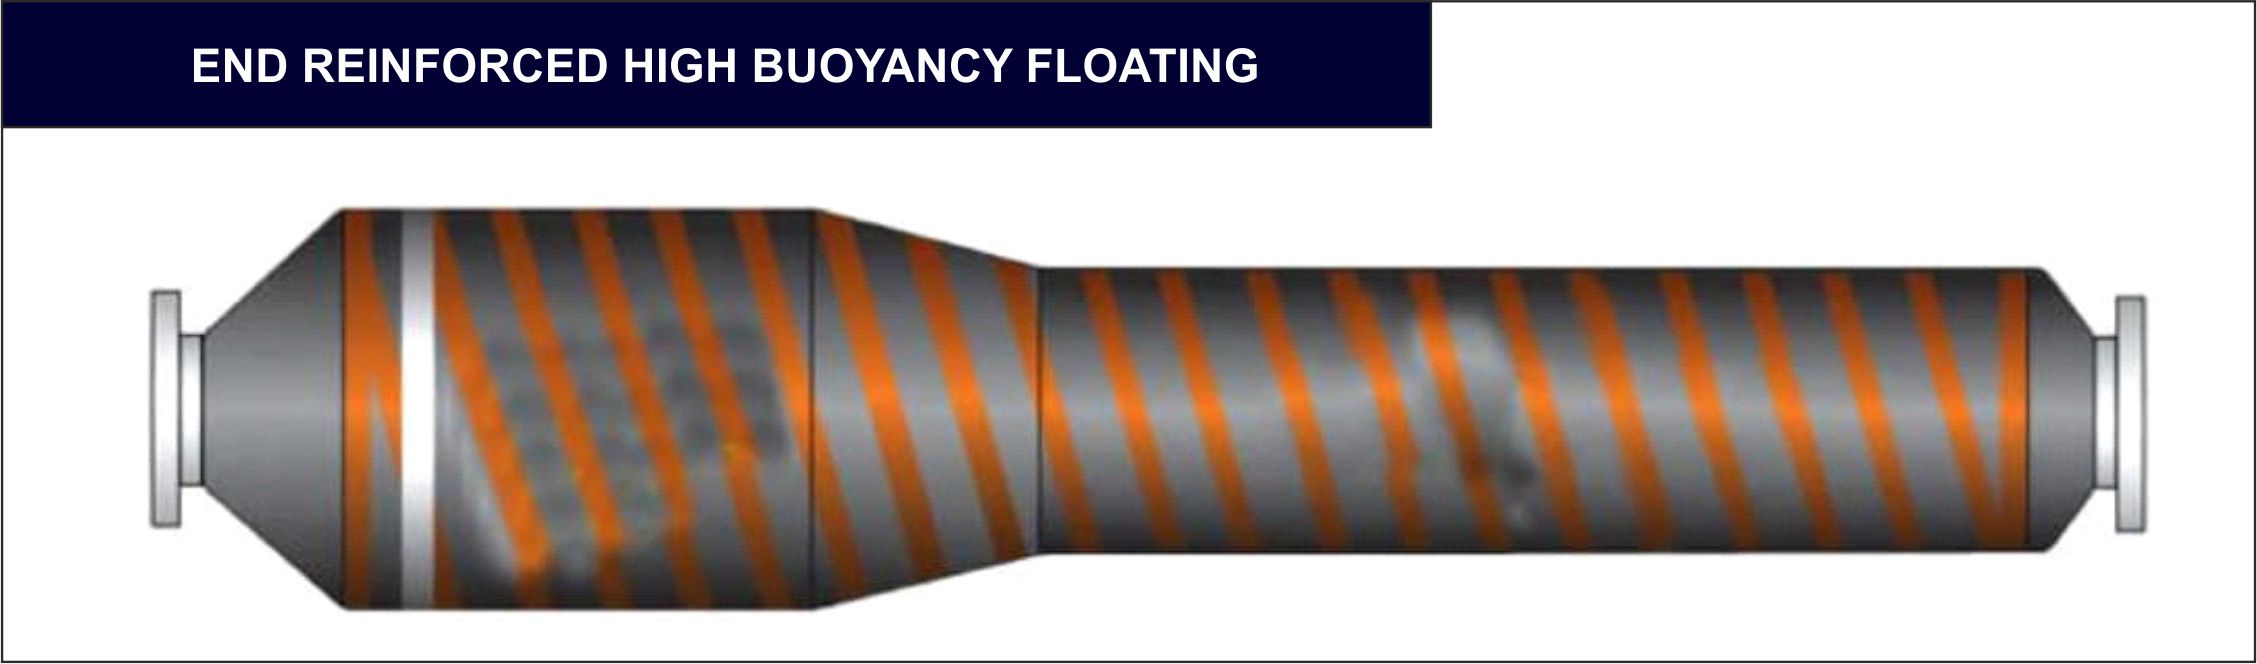 End Reinforced High Buoyancy Floating